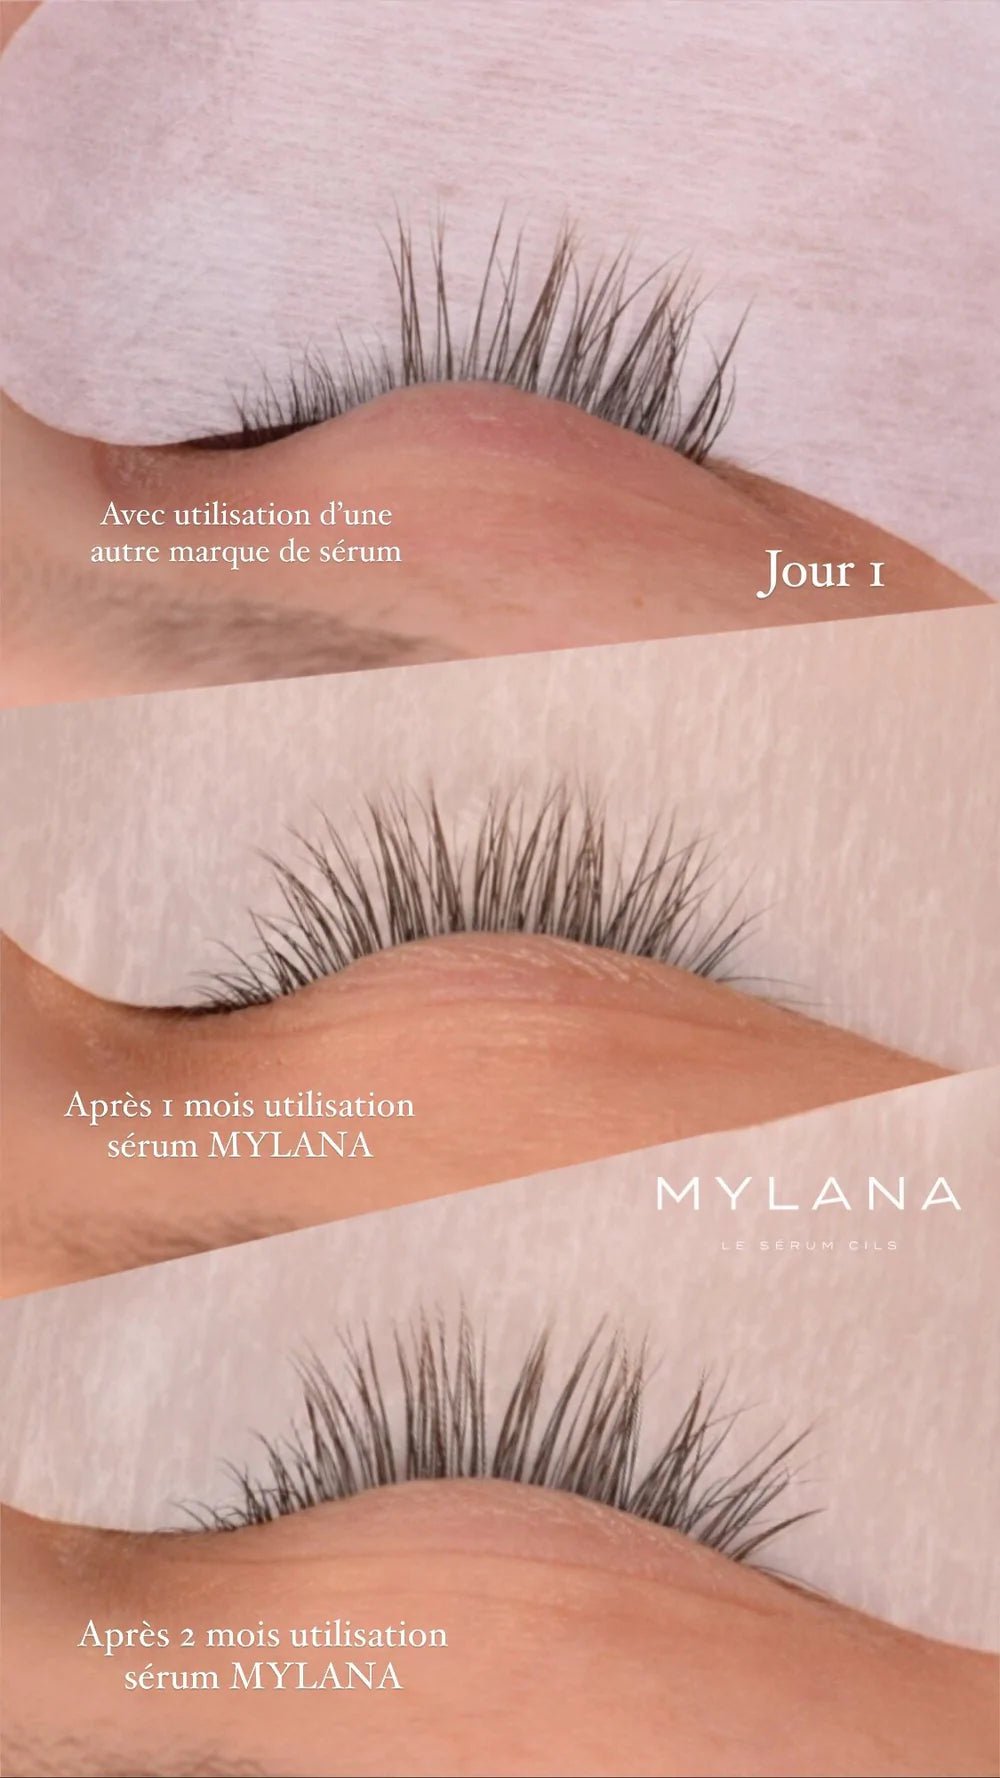 MYLANA - The eyelash serum - Espace Skins Montreal